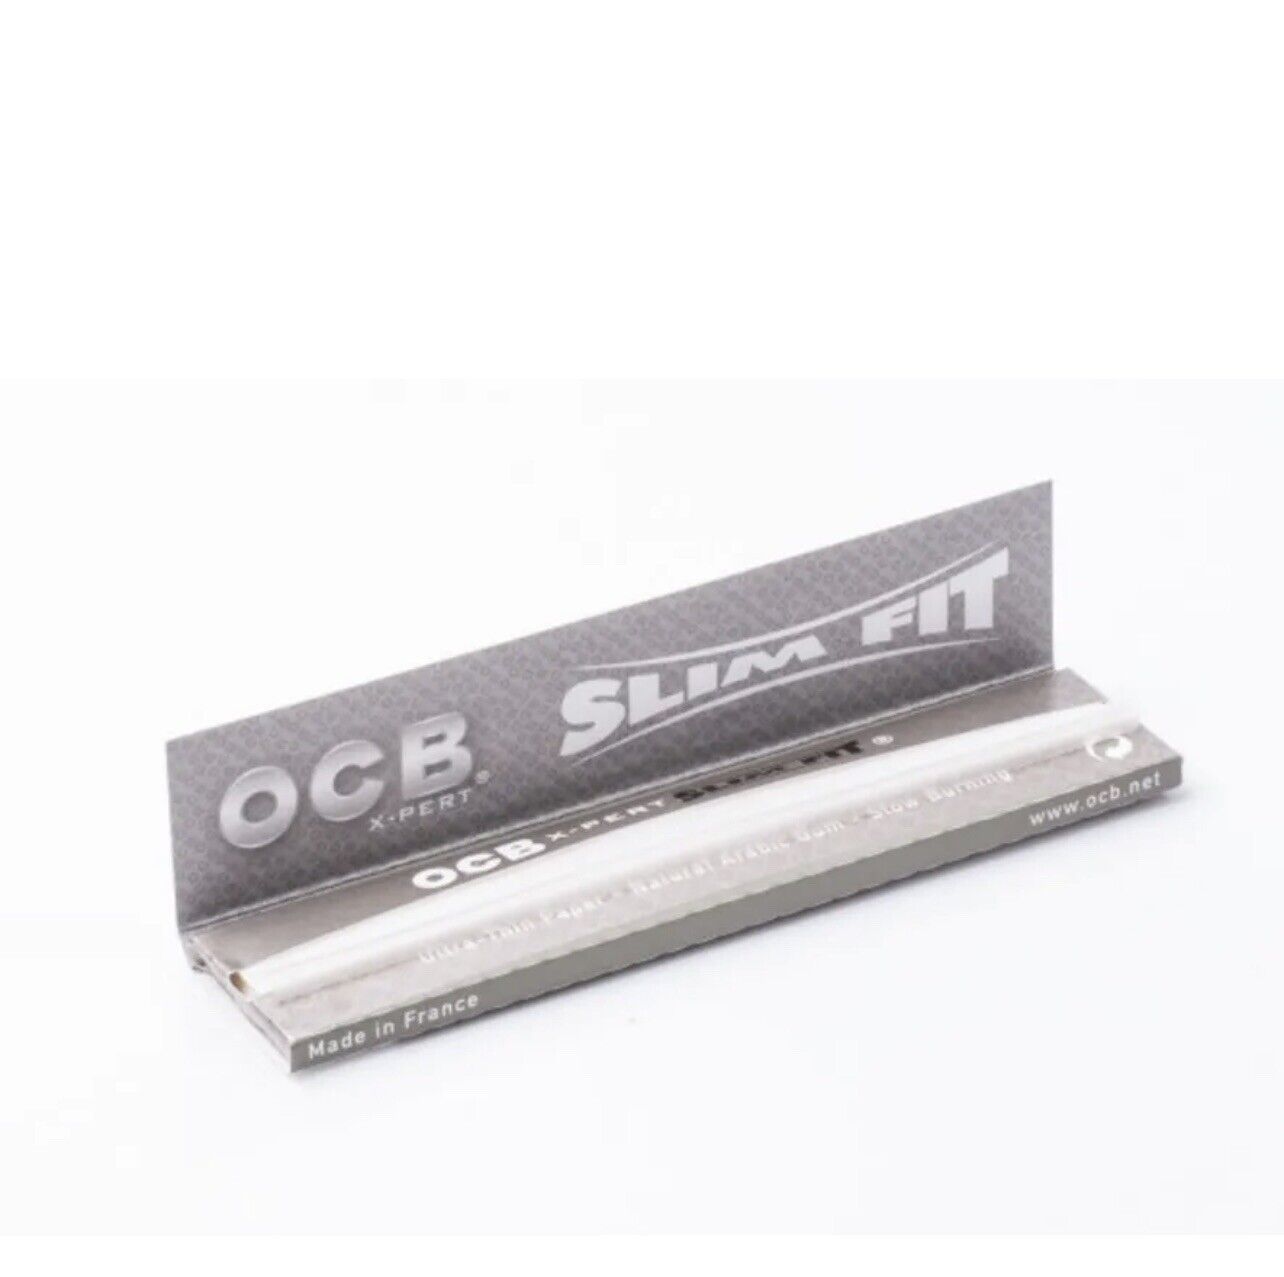 OCB Silver X- Pert rolling paper slim king size 24 booklets..